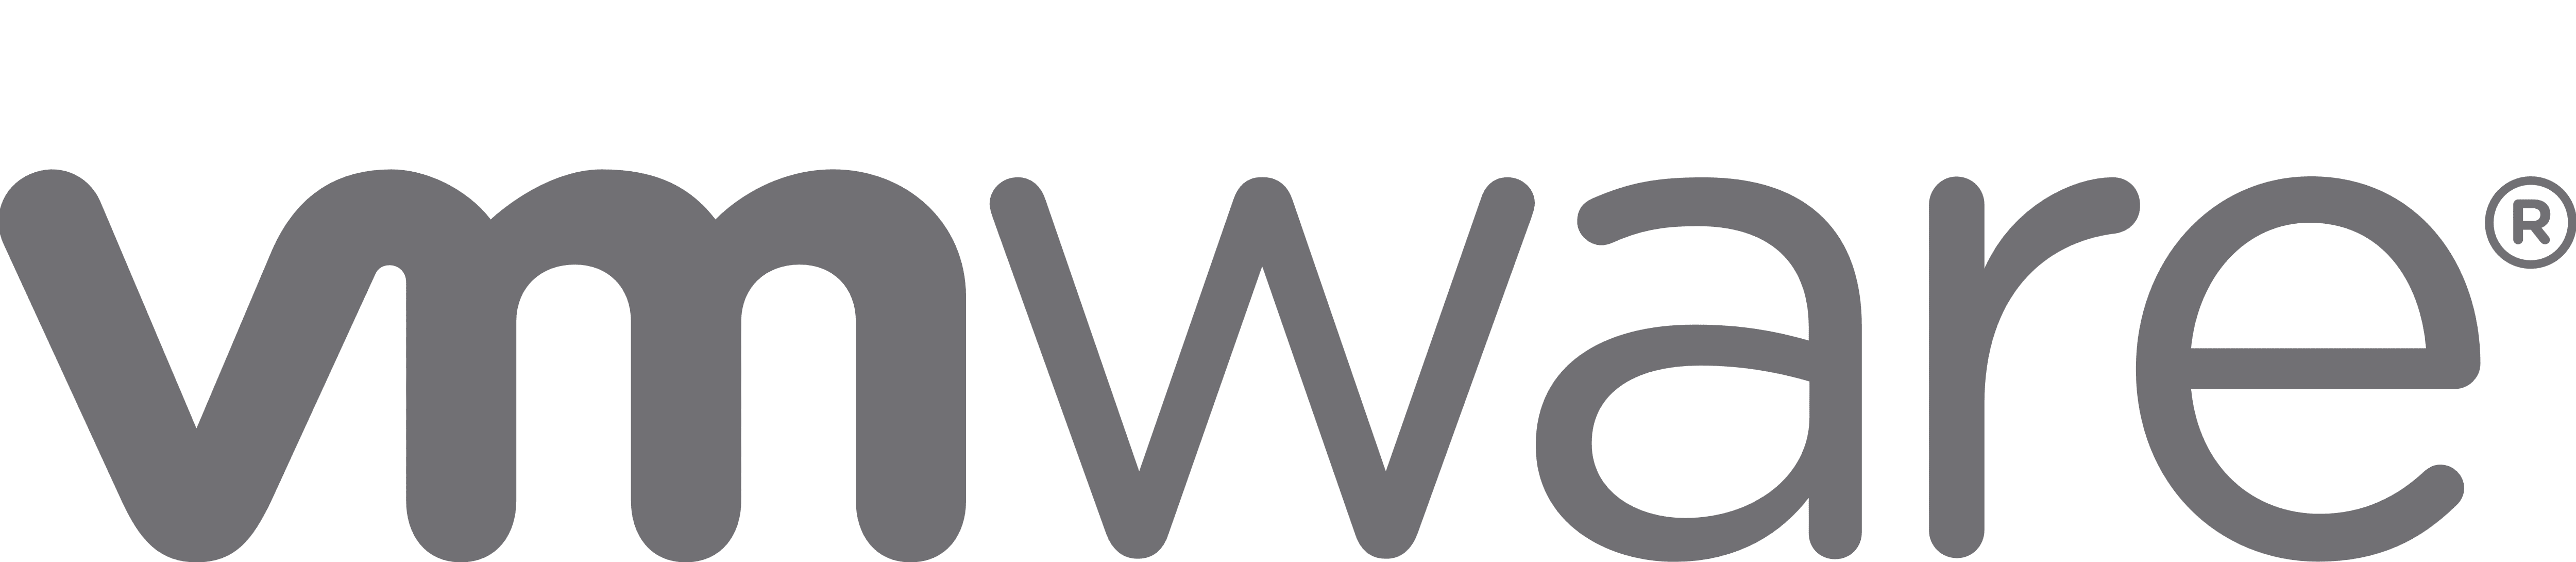 VMware Logo - Vmware Vsphere Logo Image Galleries Logo Image